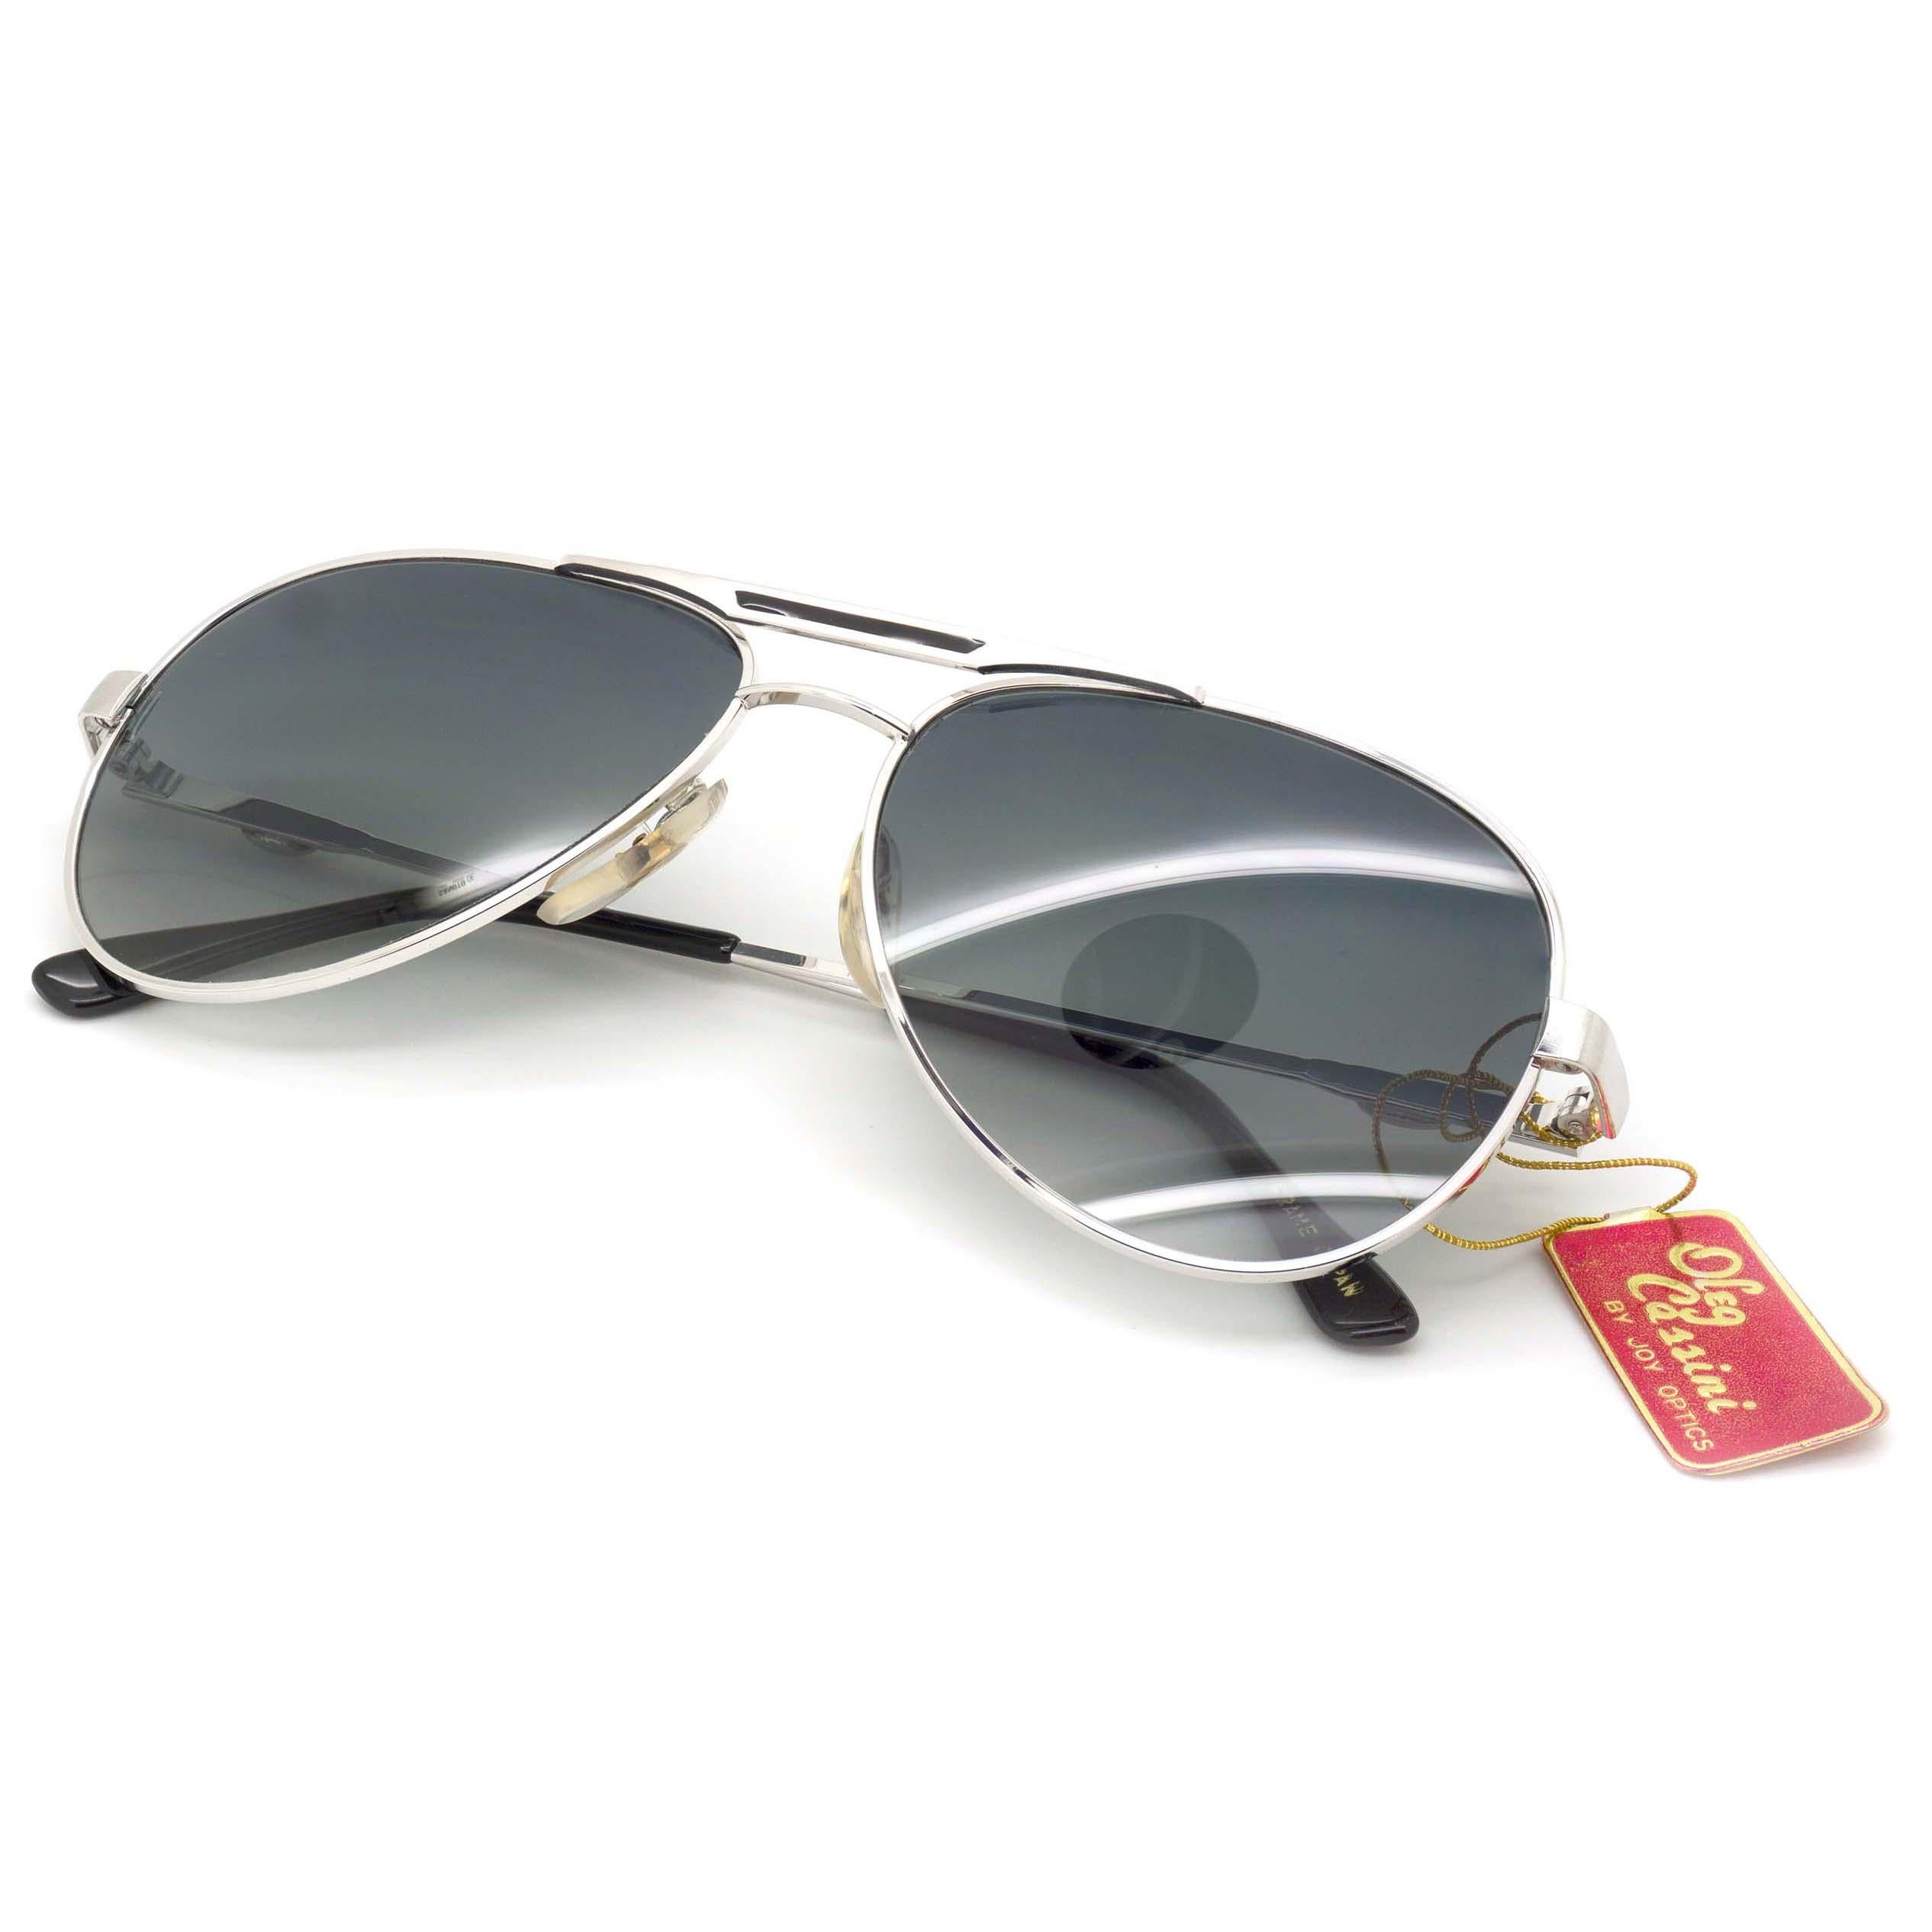 Rare Japan Oleg Cassini vintage sunglasses In New Condition For Sale In Santa Clarita, CA